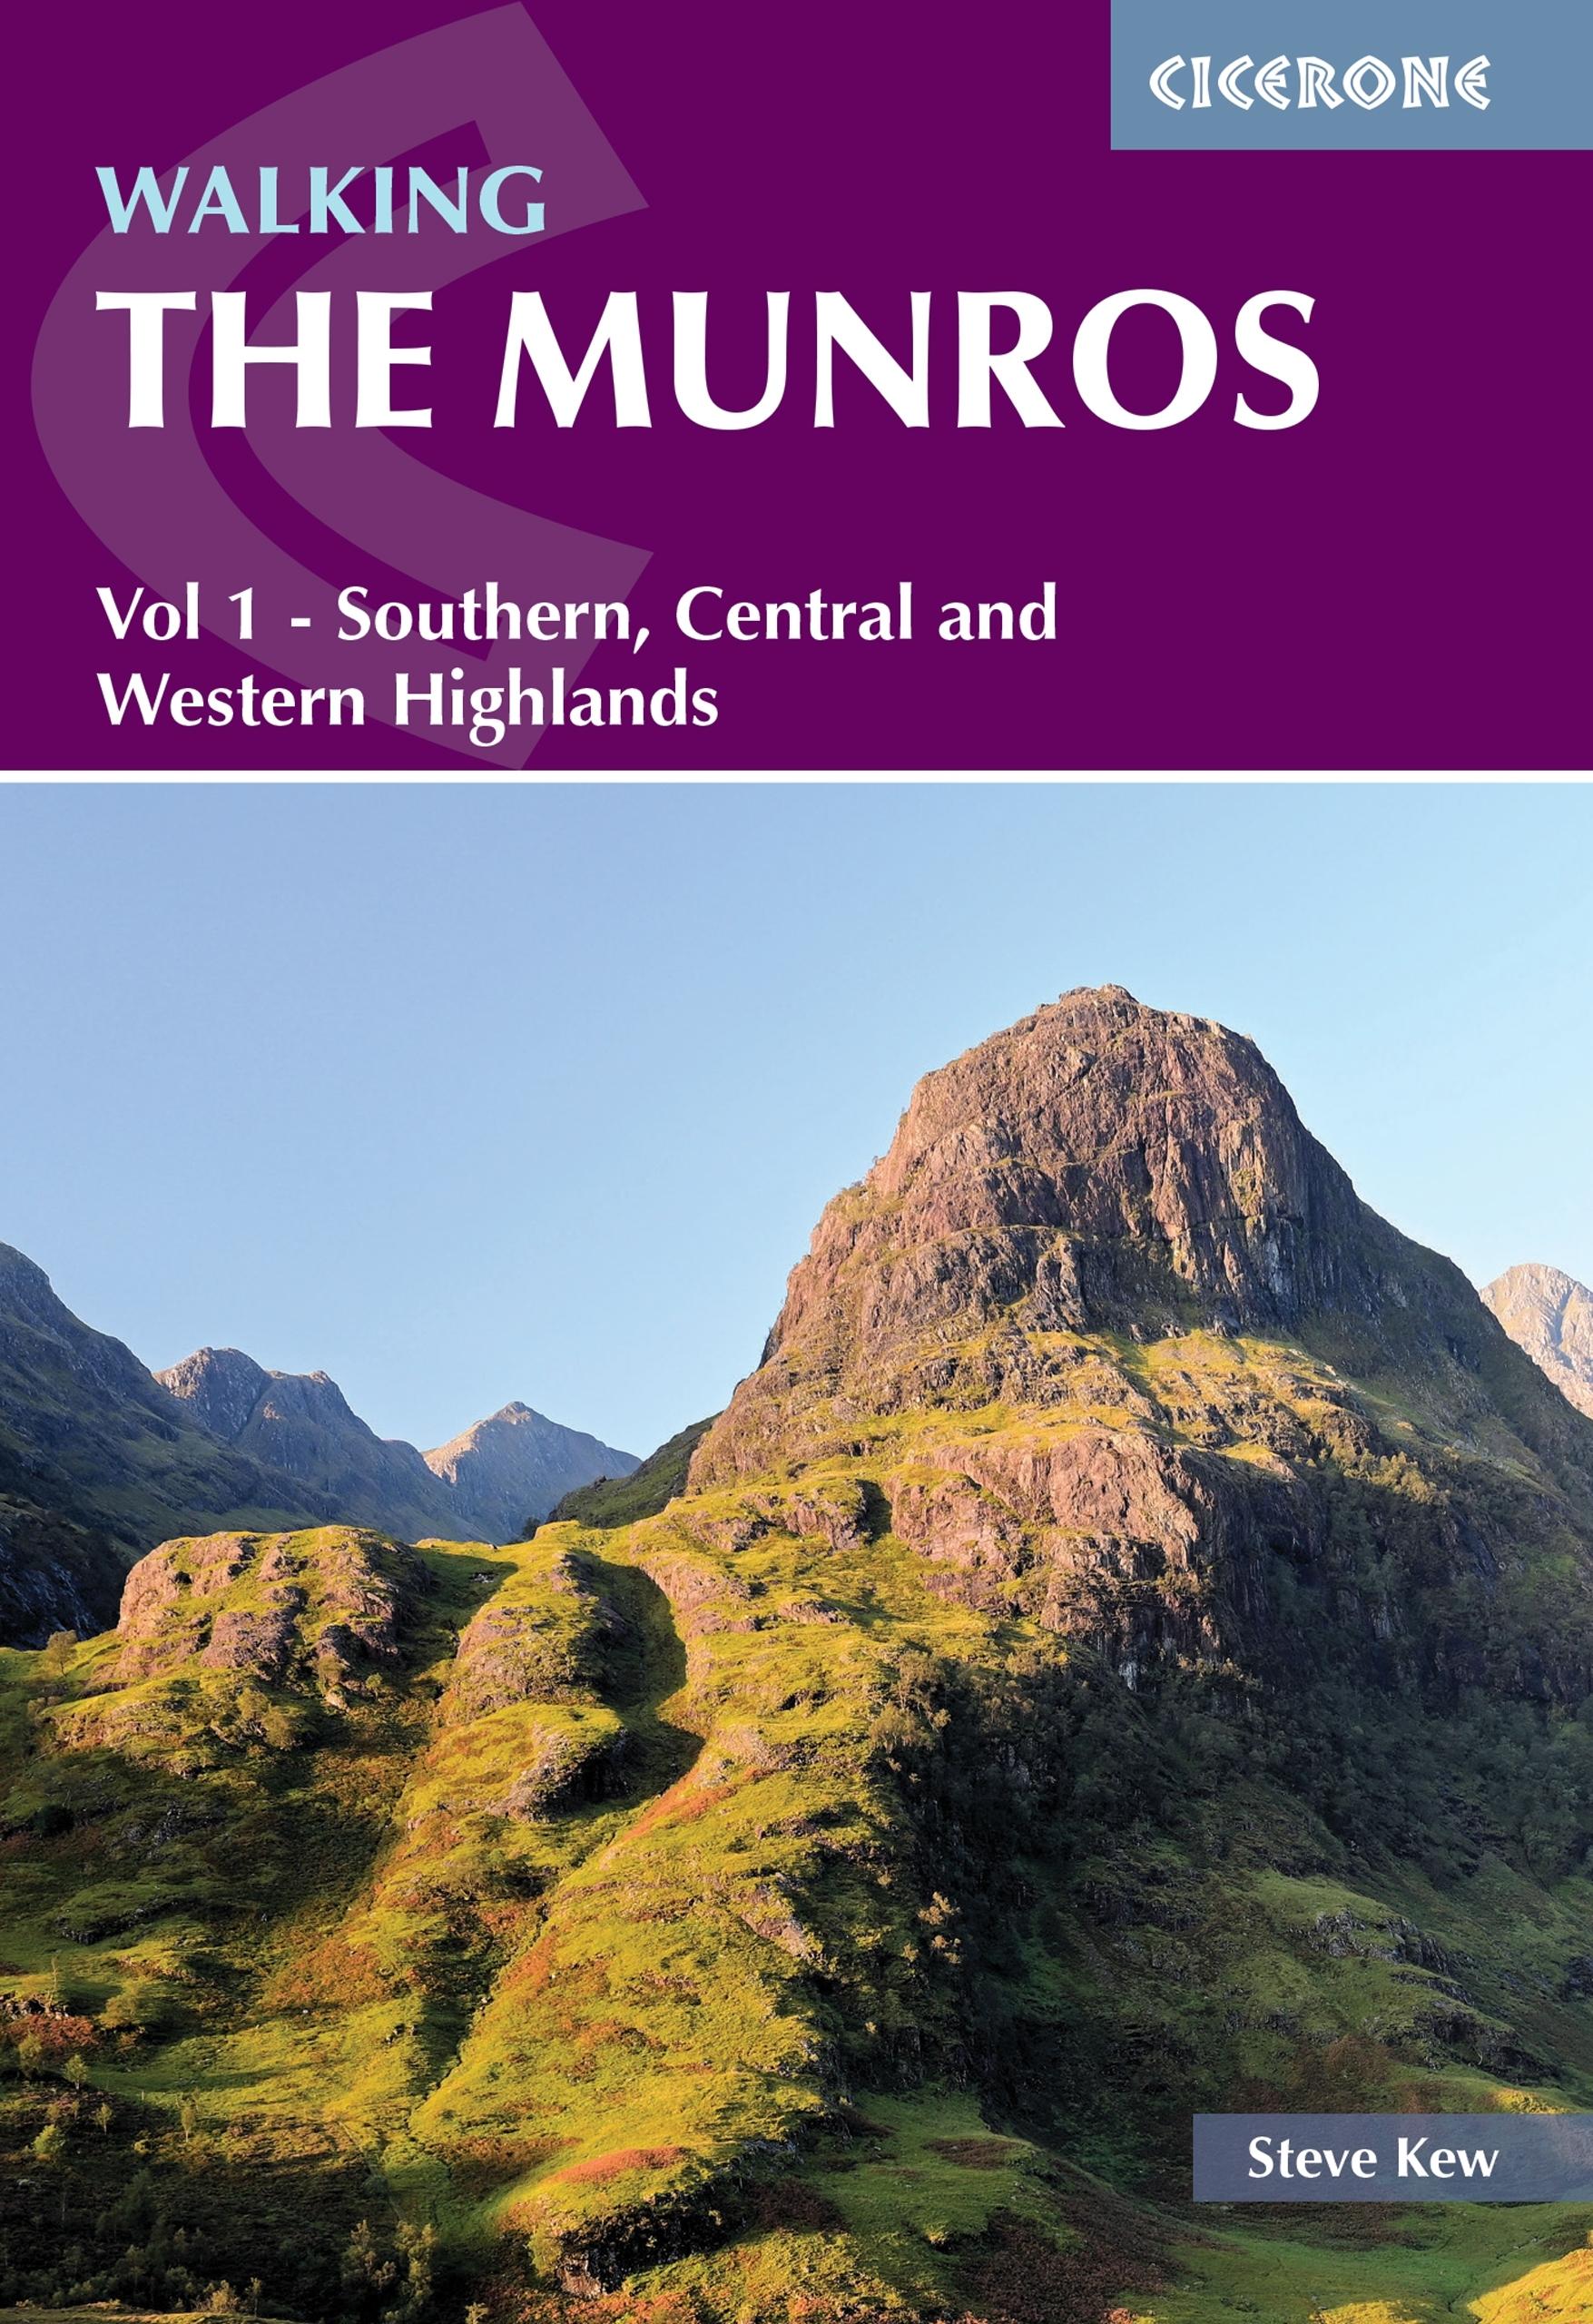 Online bestellen: Wandelgids Walking The Munros Vol 1 Southern, Central and Western Highlands - Schotland | Cicerone